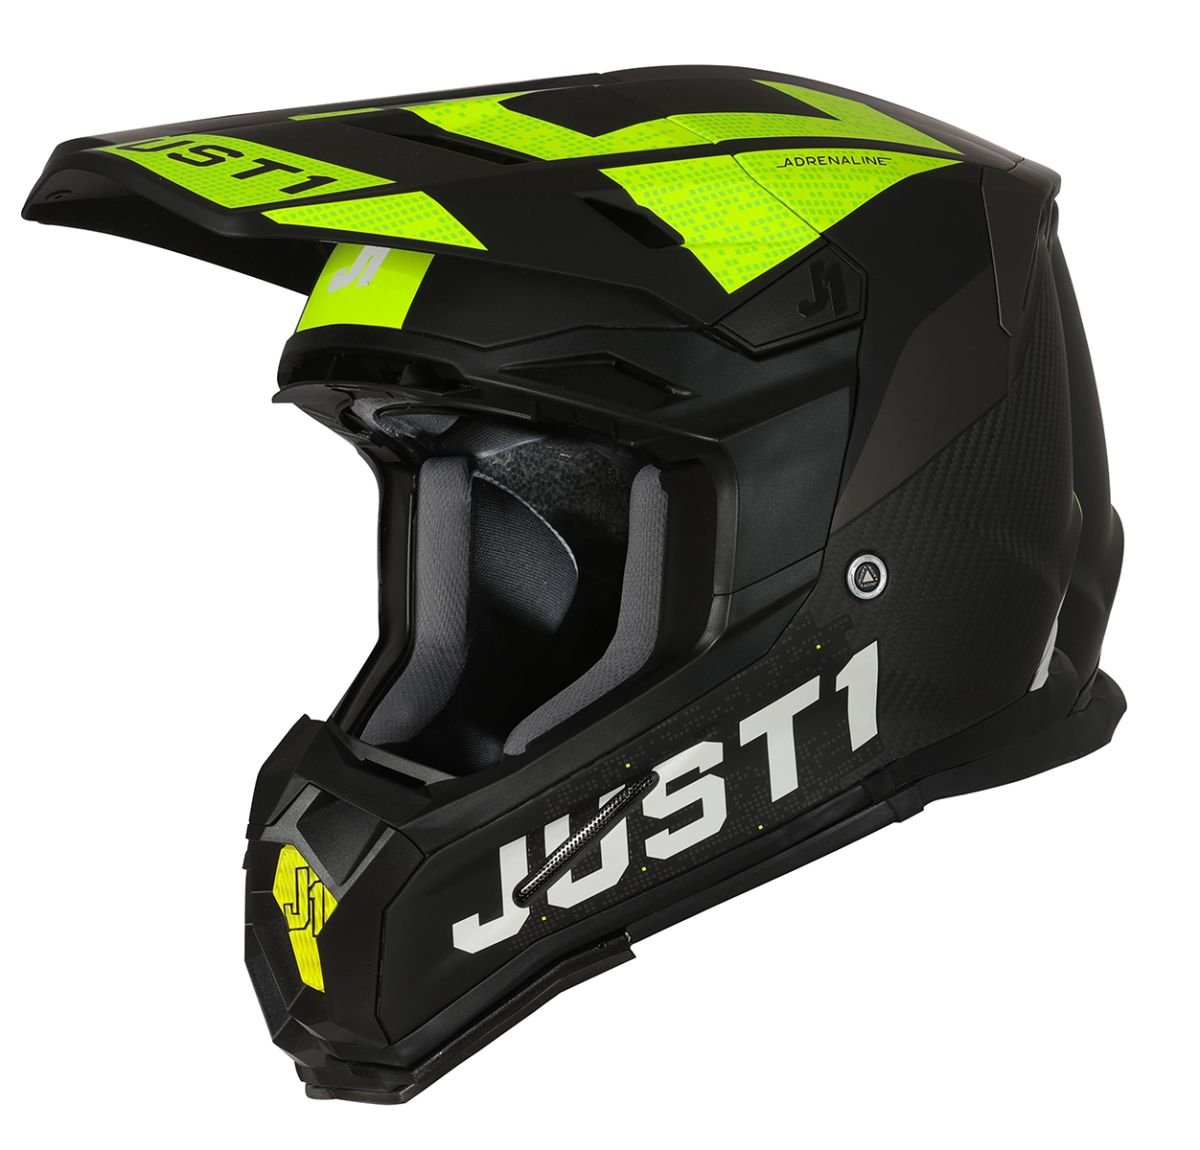 Image of Just1 Helmet J-22 Adrenaline Black Yellow Fluo Carbon Matt Offroad Helmet Size L ID 8055727450333